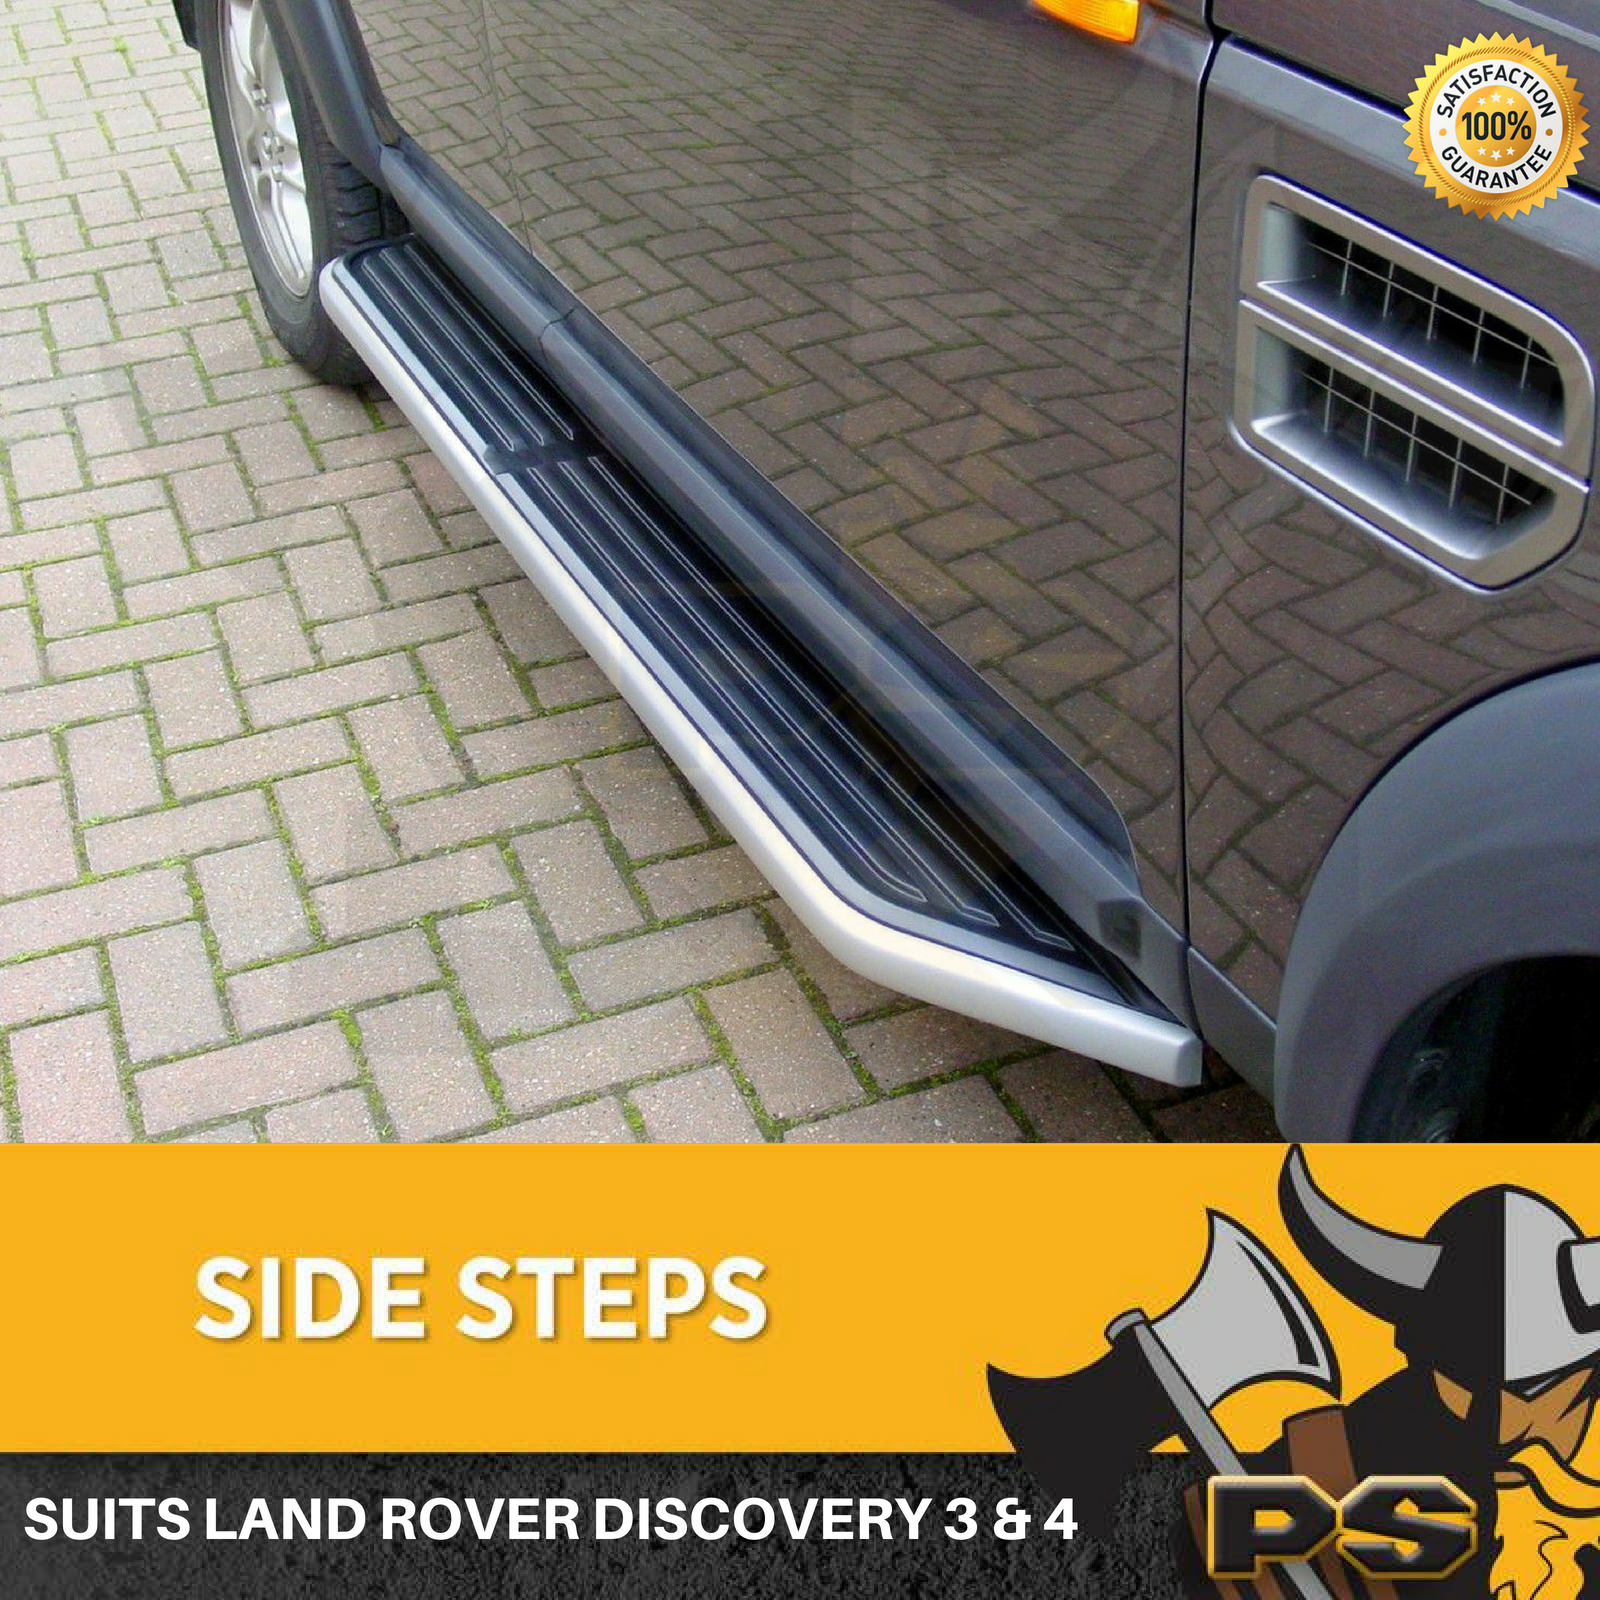 Пороги Land Rover Discovery 3 Discovery 4 пороги подножки OEM. Пороги на ленд Ровер Дискавери 4. Discovery 3 подножки. Land Rover Discovery 4 пороги штатные. Подножка дискавери